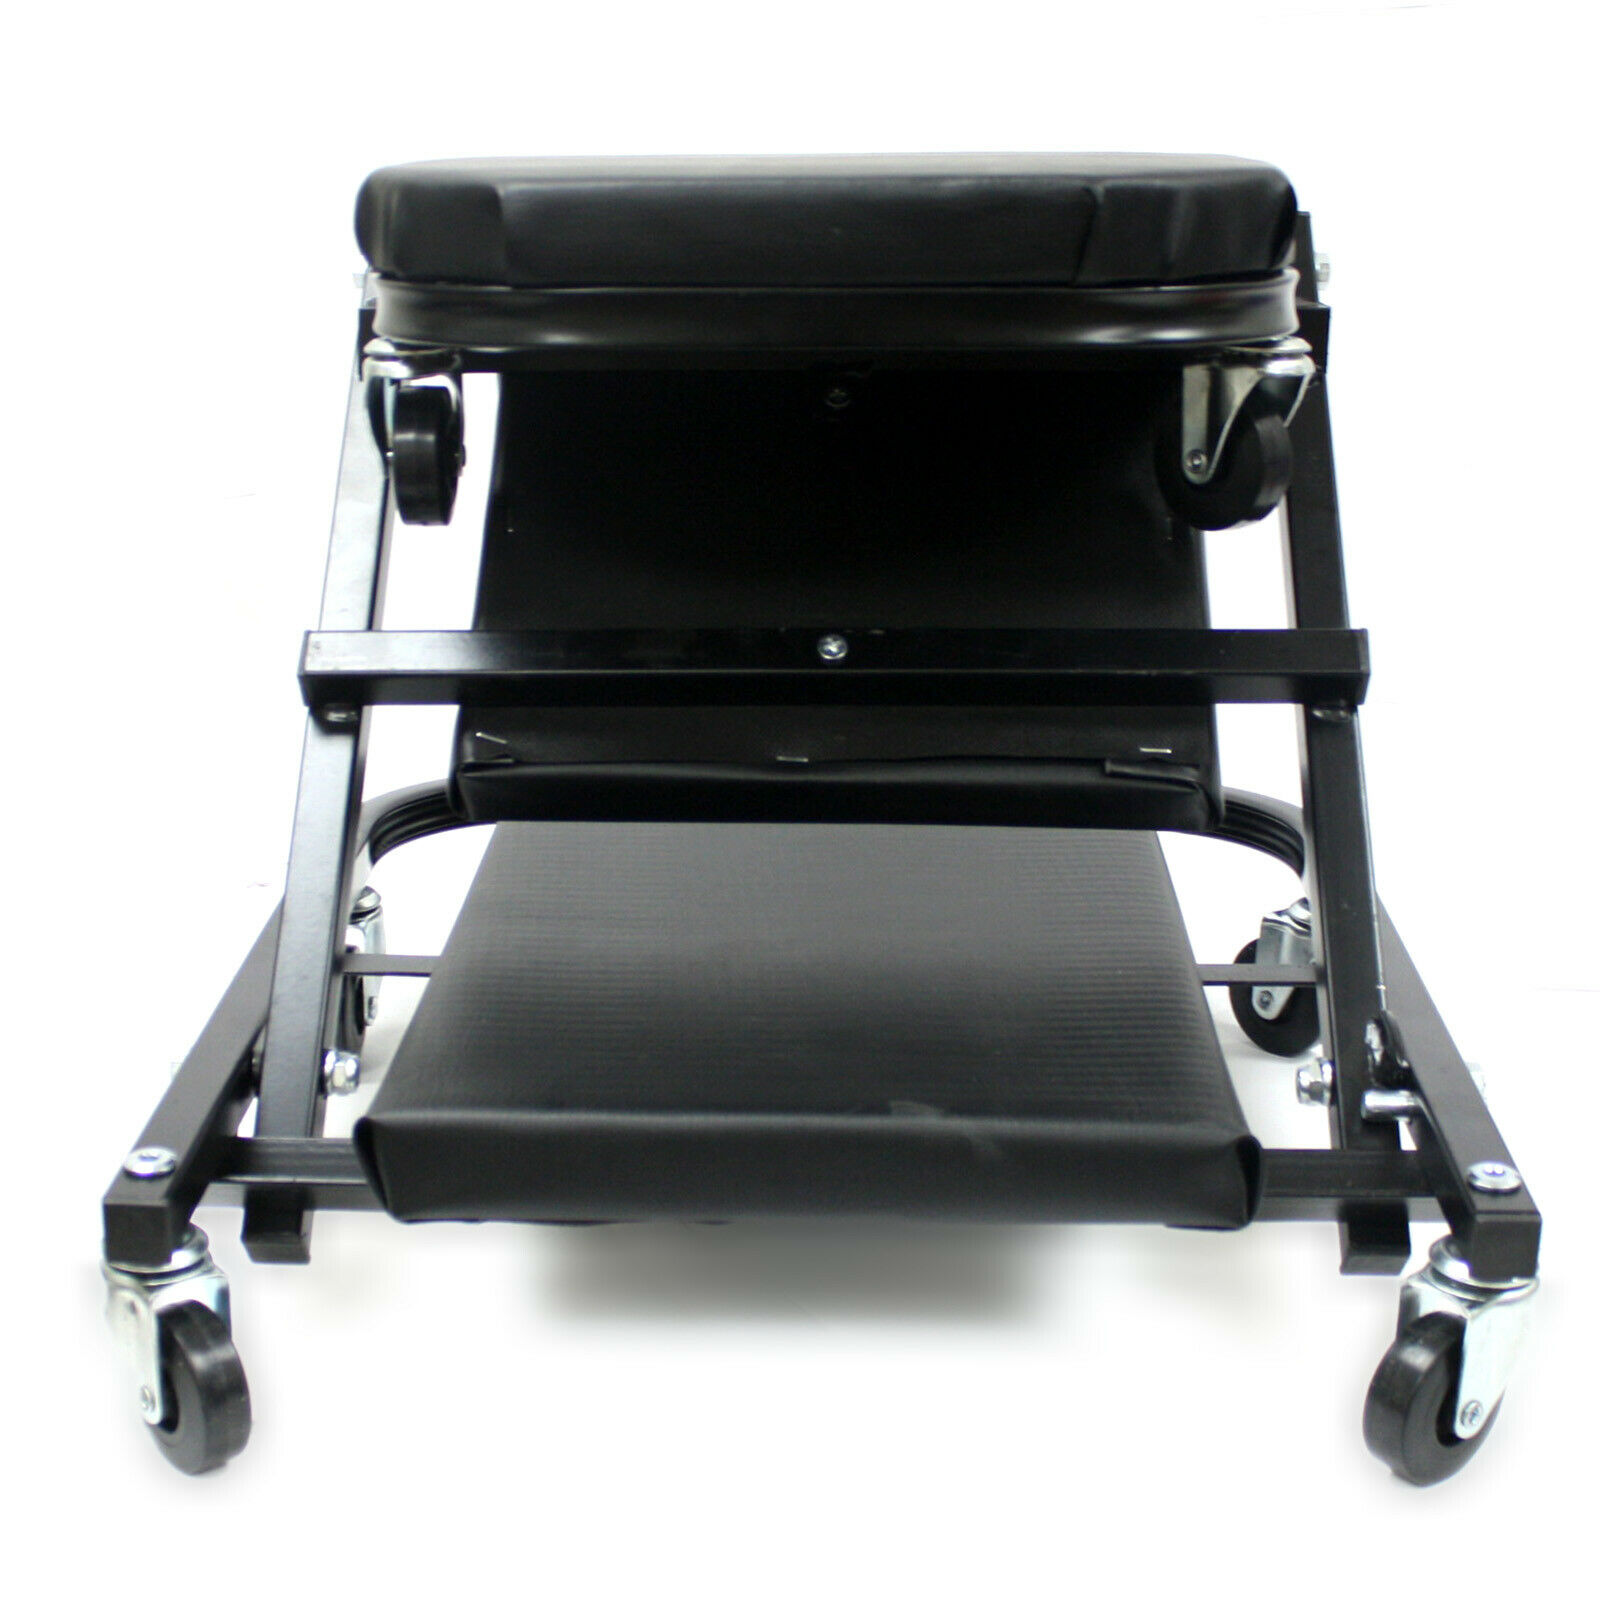 Foldable Z Creeper Seat Rolling Chair Auto Mechanics Shop Garage Work Stool BLK 